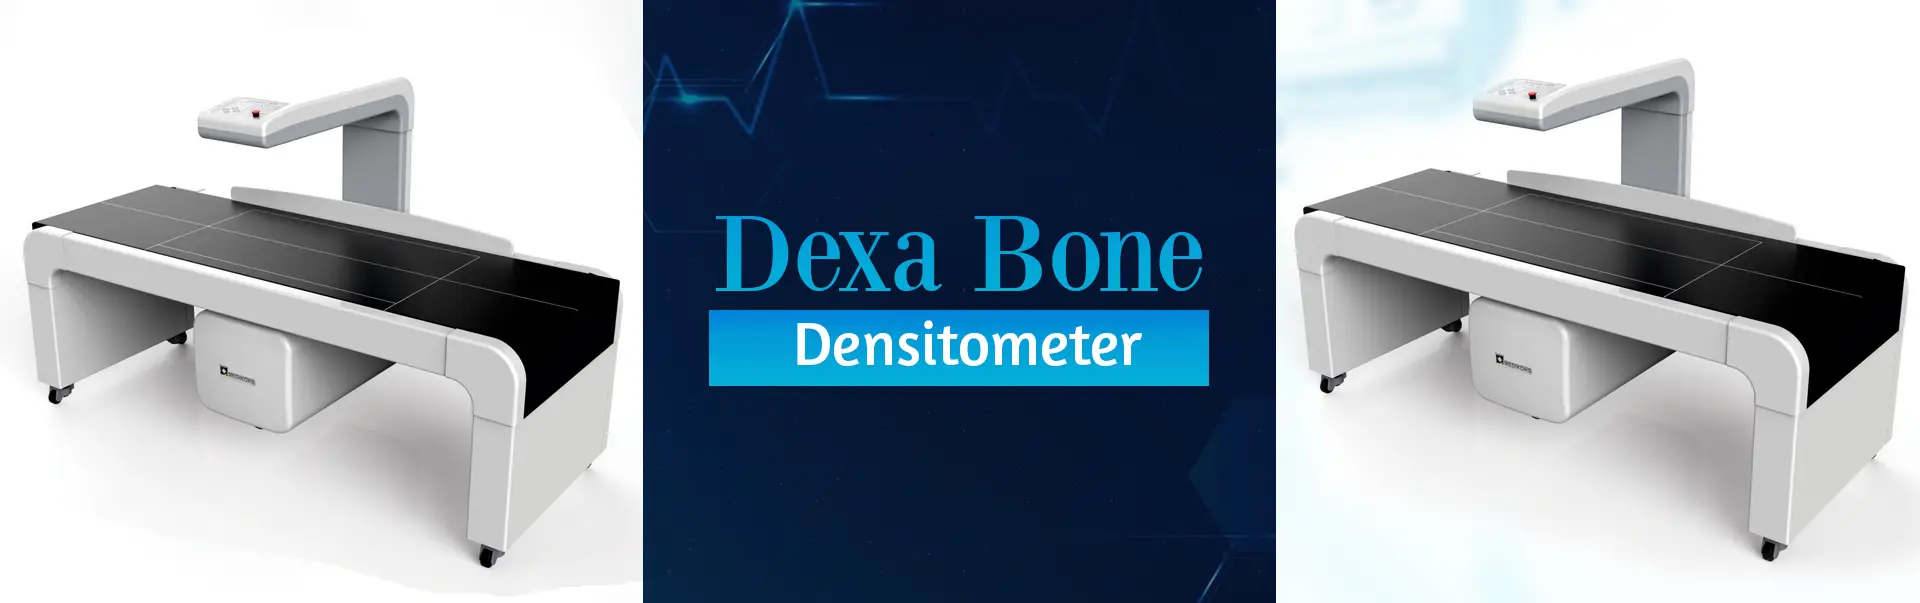 Dexa Bone Densitometer Manufacturers in Shahjahanpur